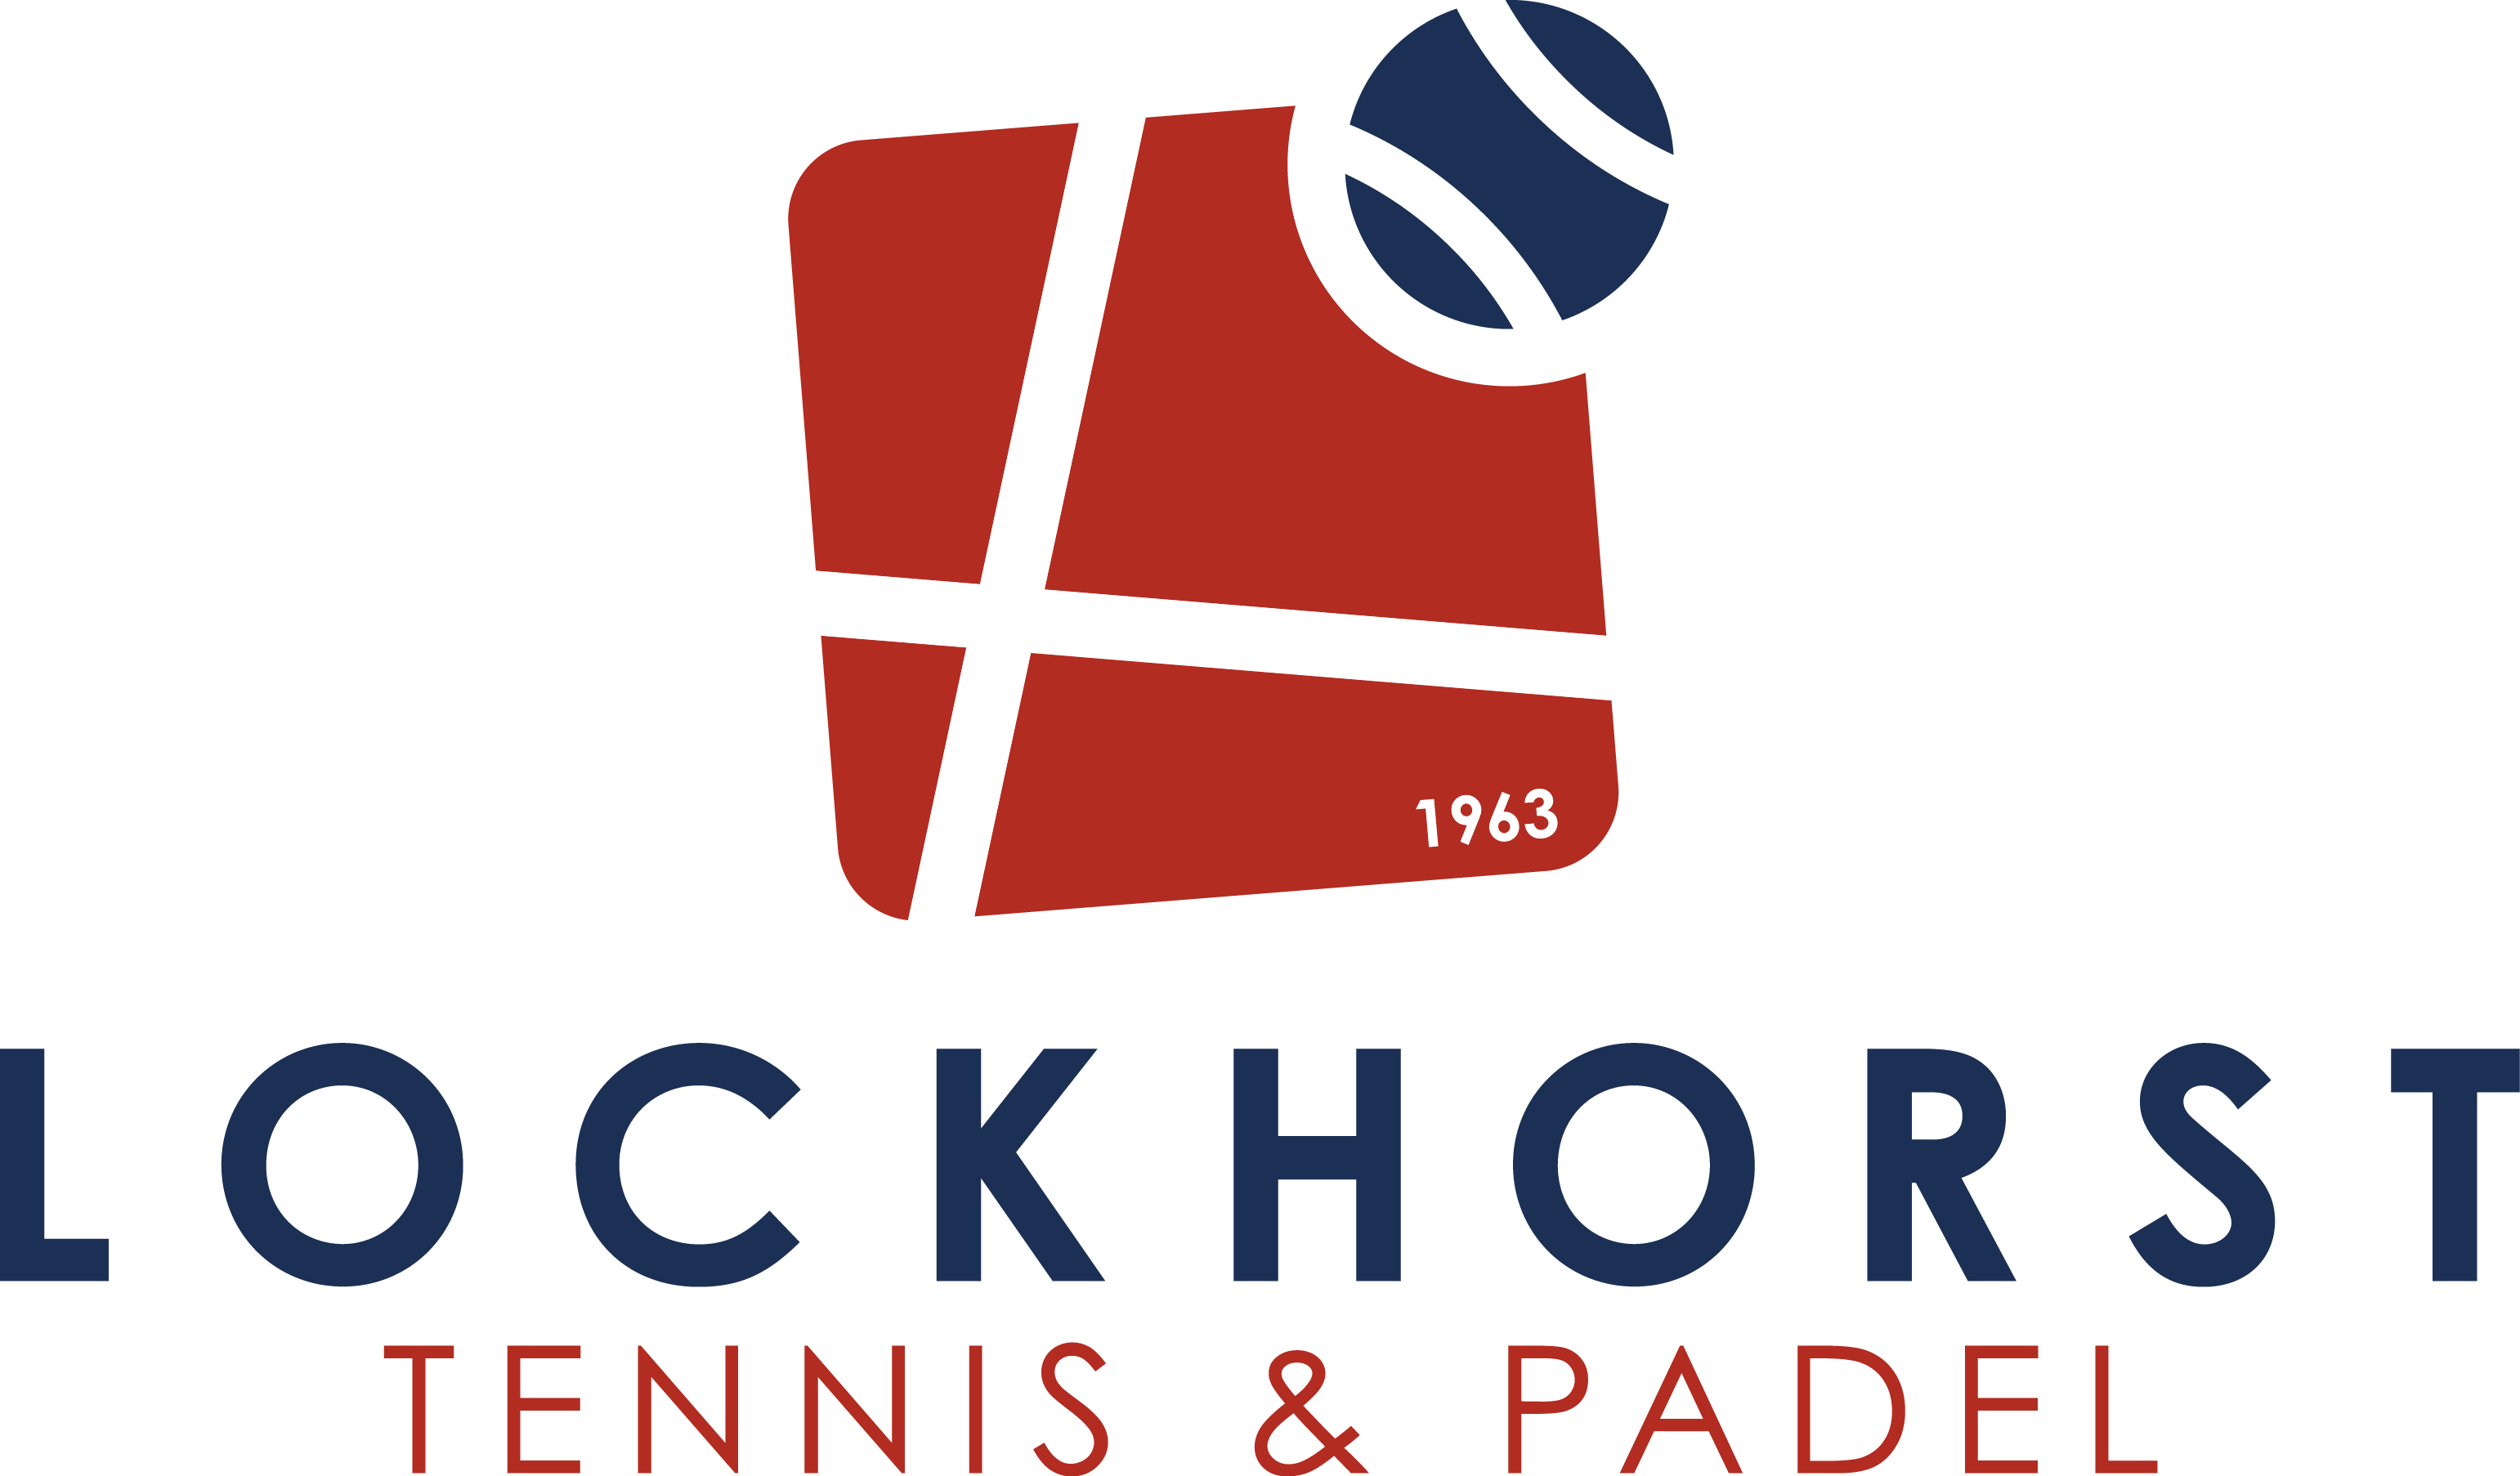 Profile image of venue Lockhorst Tennis & Padel